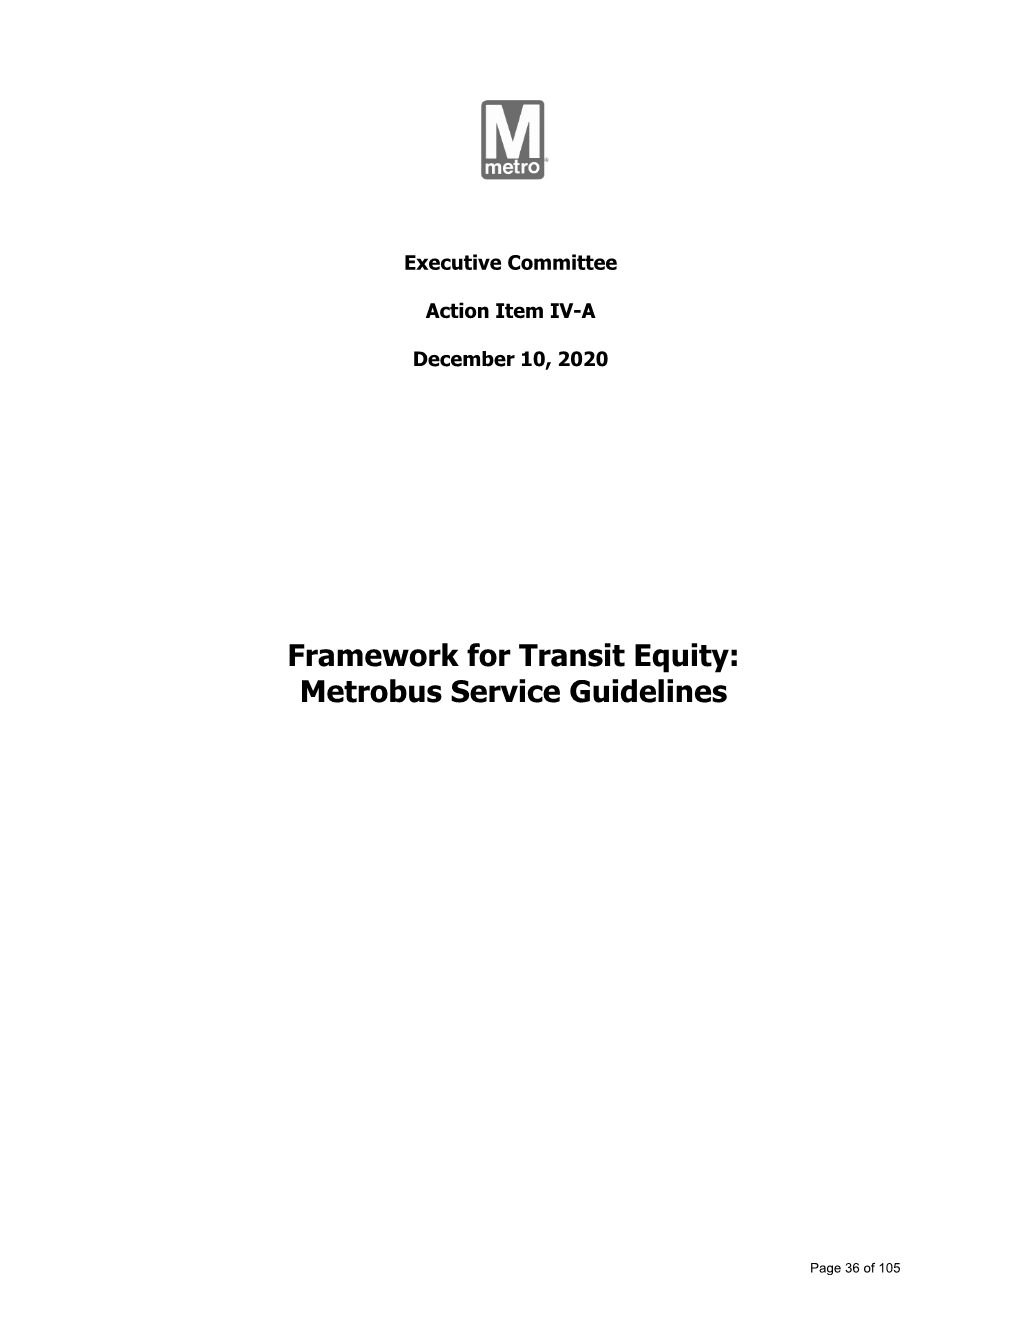 Framework for Transit Equity: Metrobus Service Guidelines